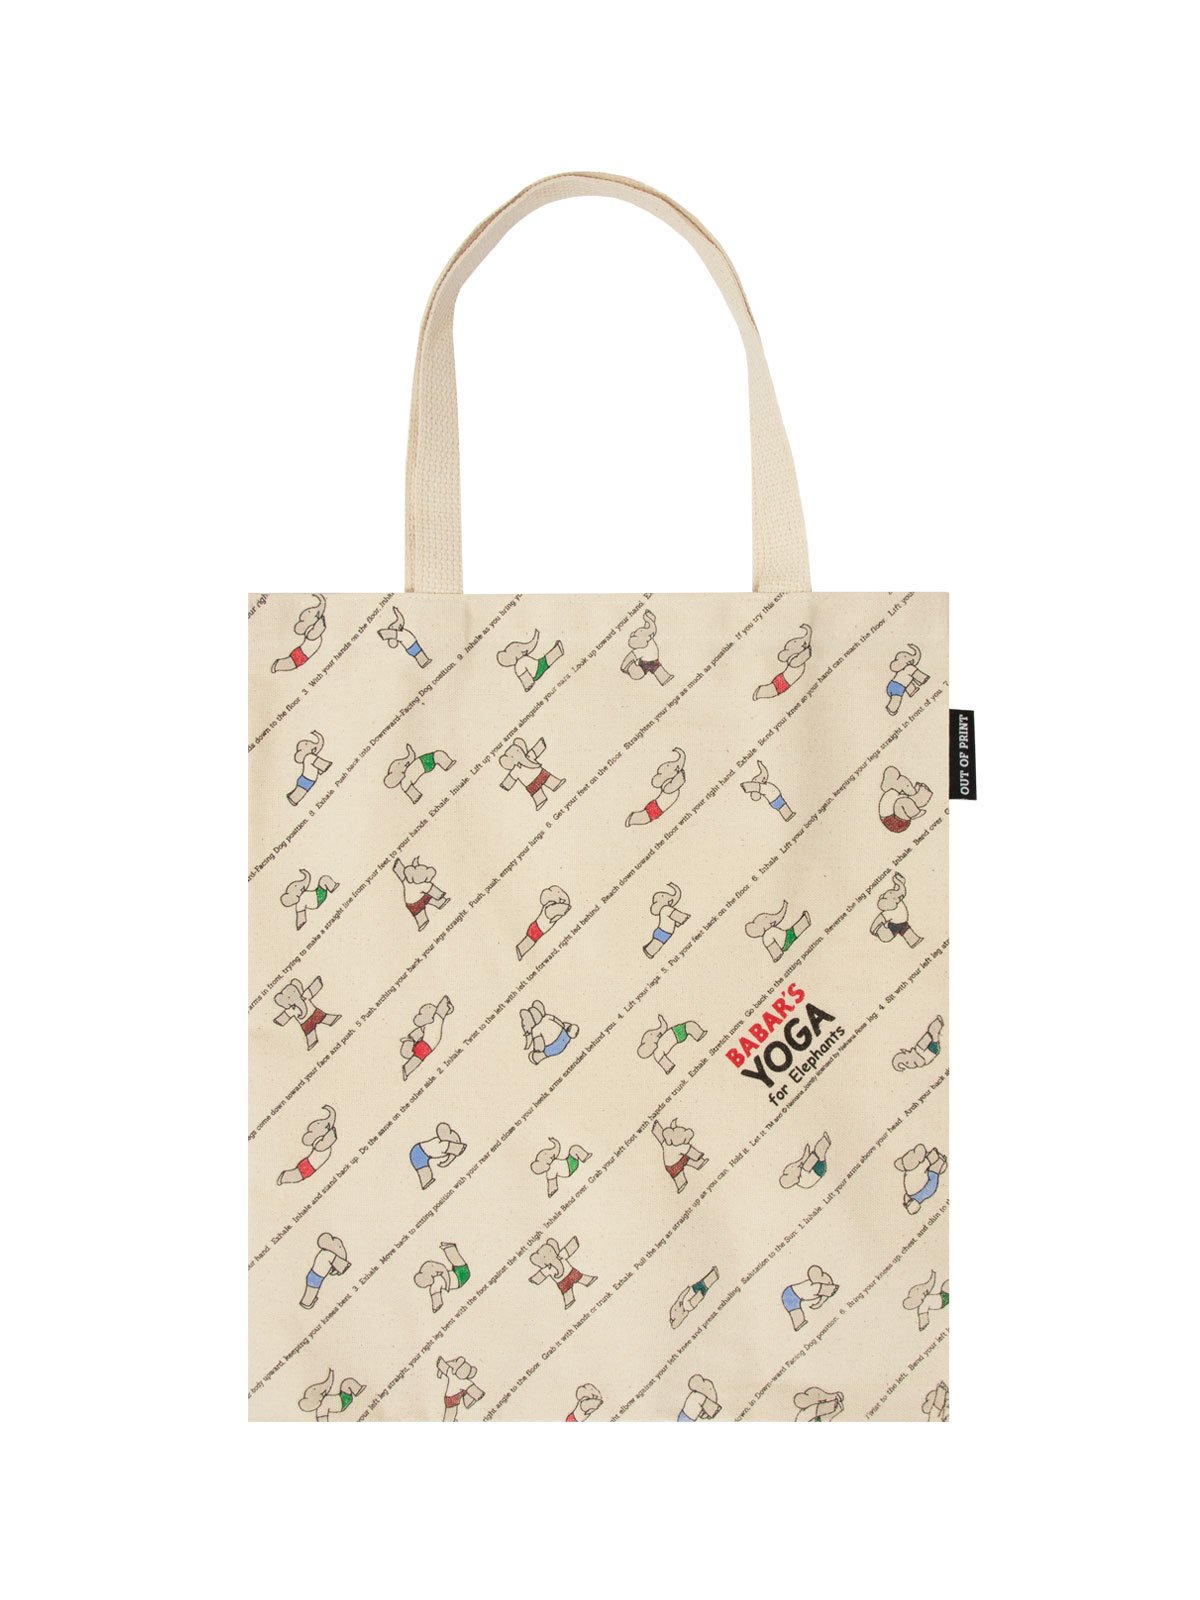 Gingham Cotton Tote Bag  Gabrielle Paris Tote Bag — Hoppe Shoppe